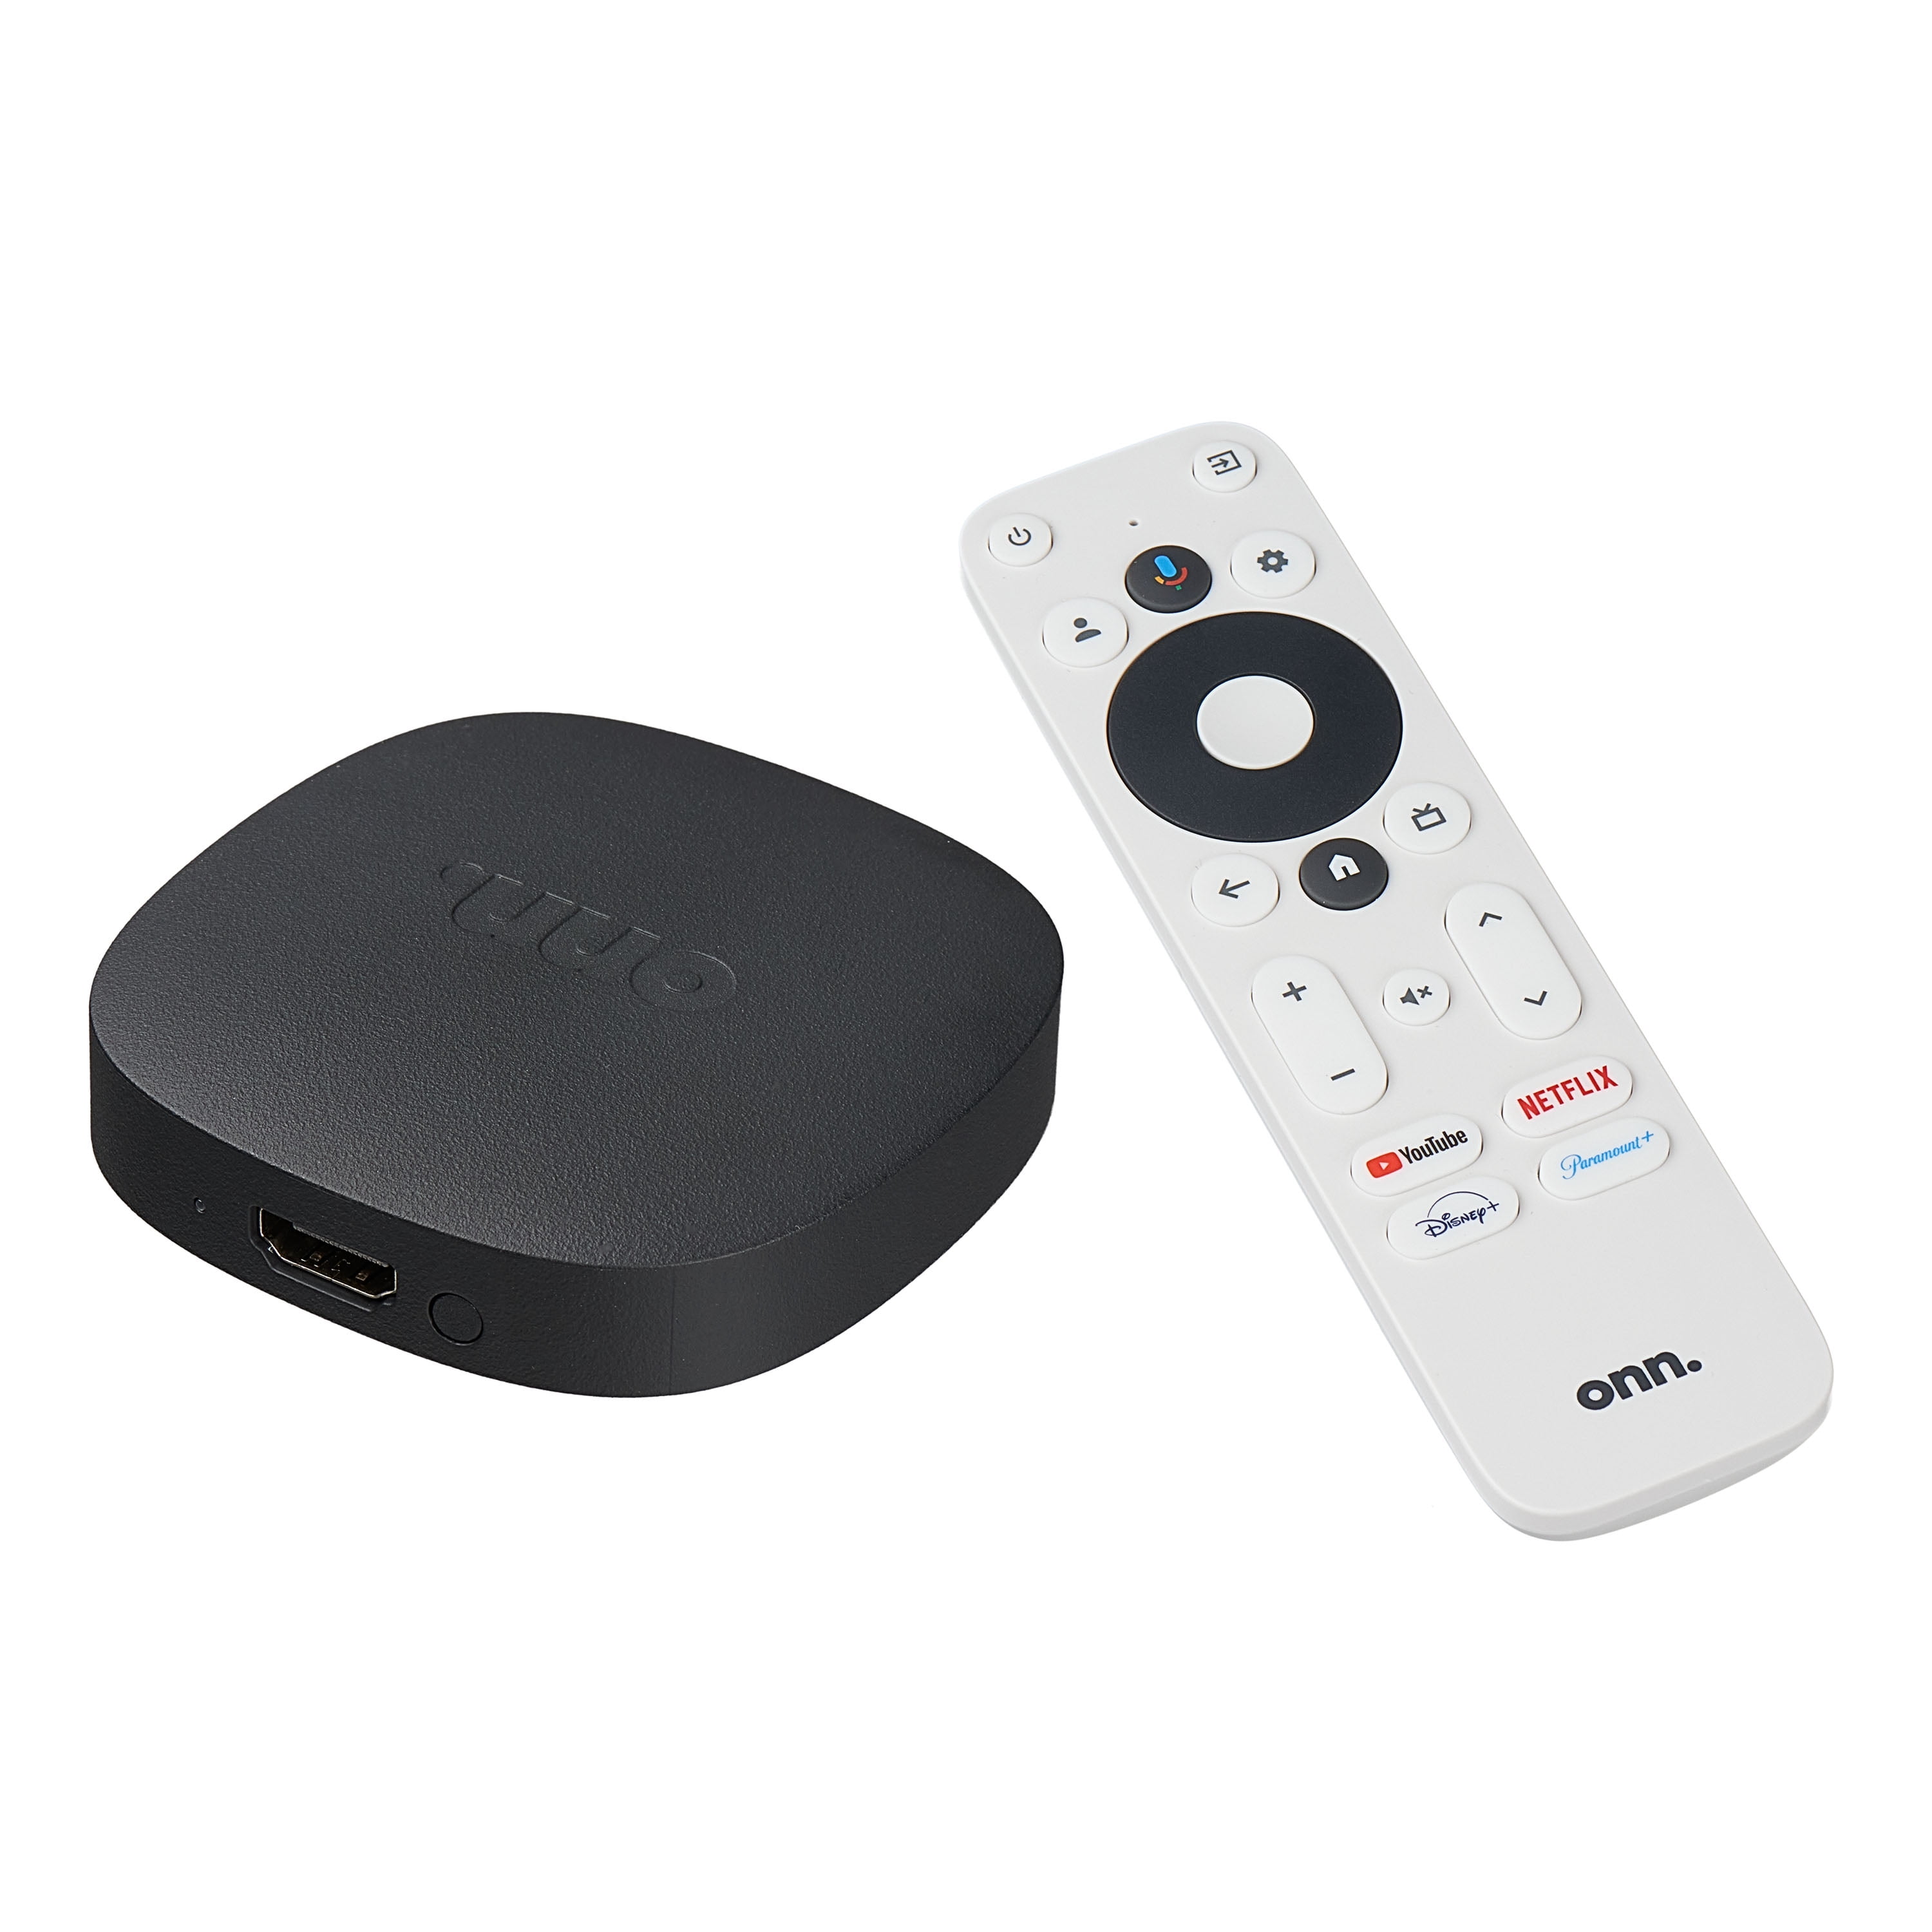  ONN Smart TV LED Class HD (720P) de 24 pulgadas compatible con  Netflix, Disney+, Apple TV,  y funciona con Google Assistant,  100012590